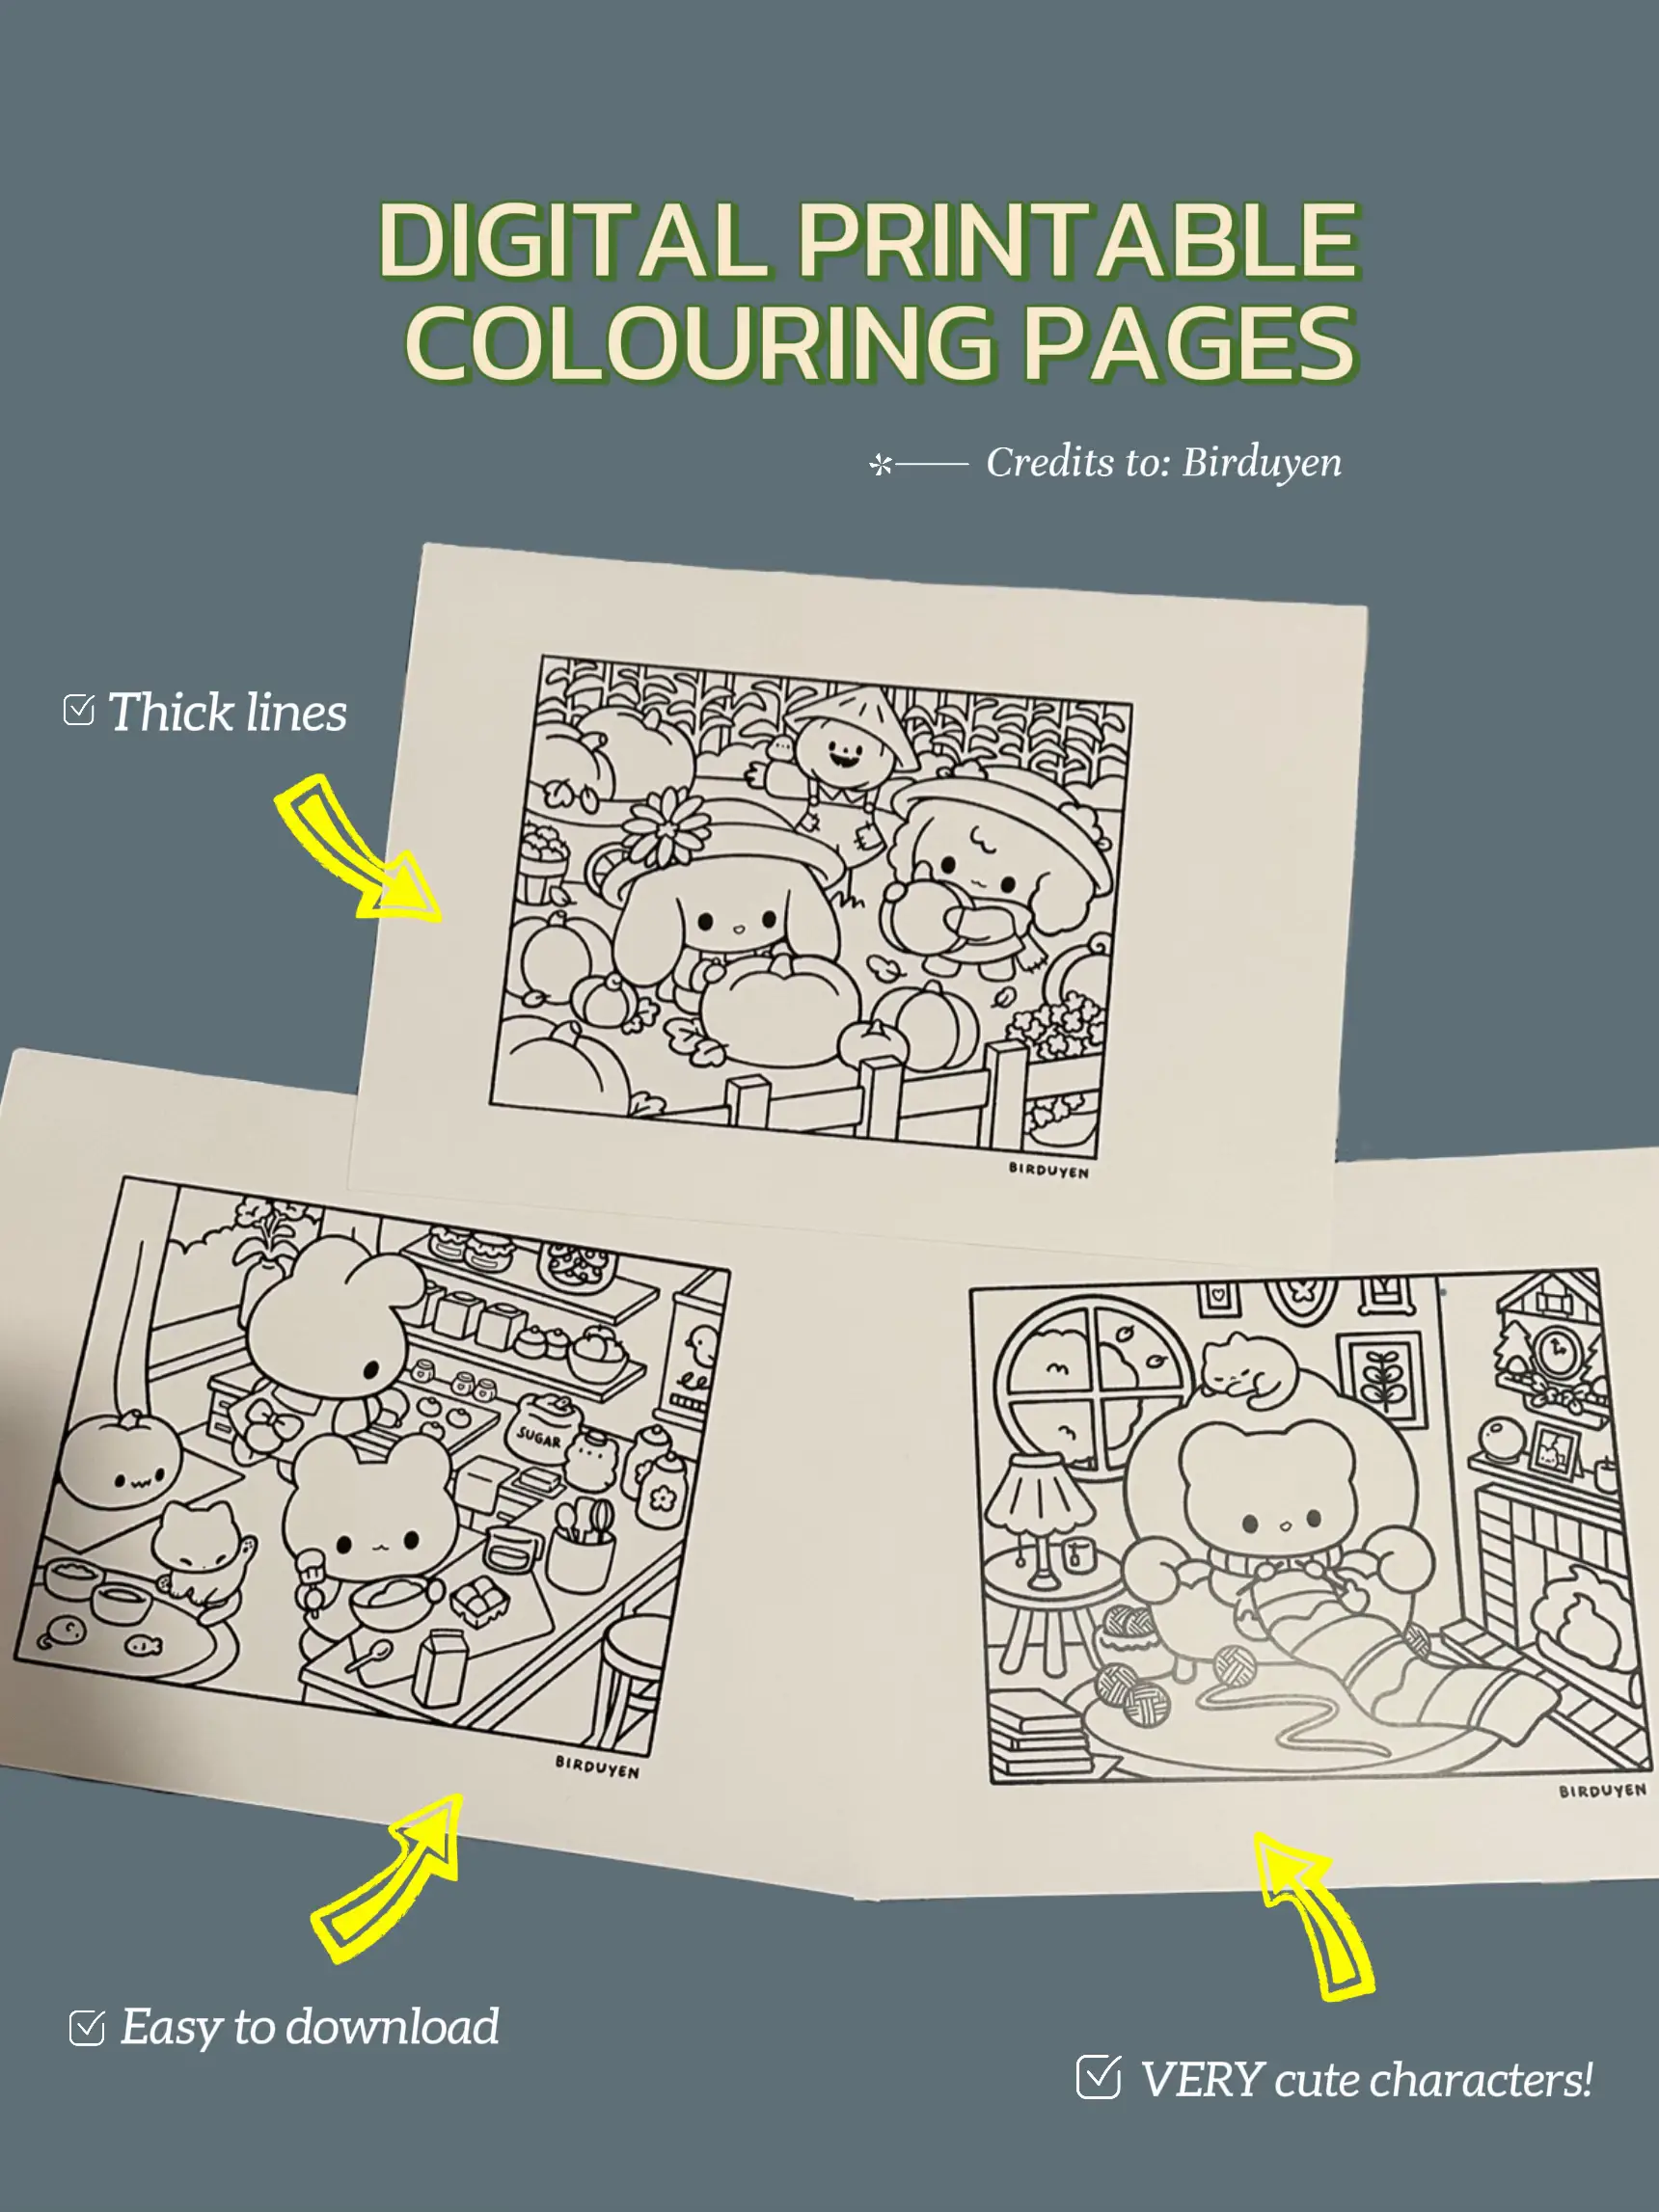 bobbie goods free coloring pages - Lemon8 Search